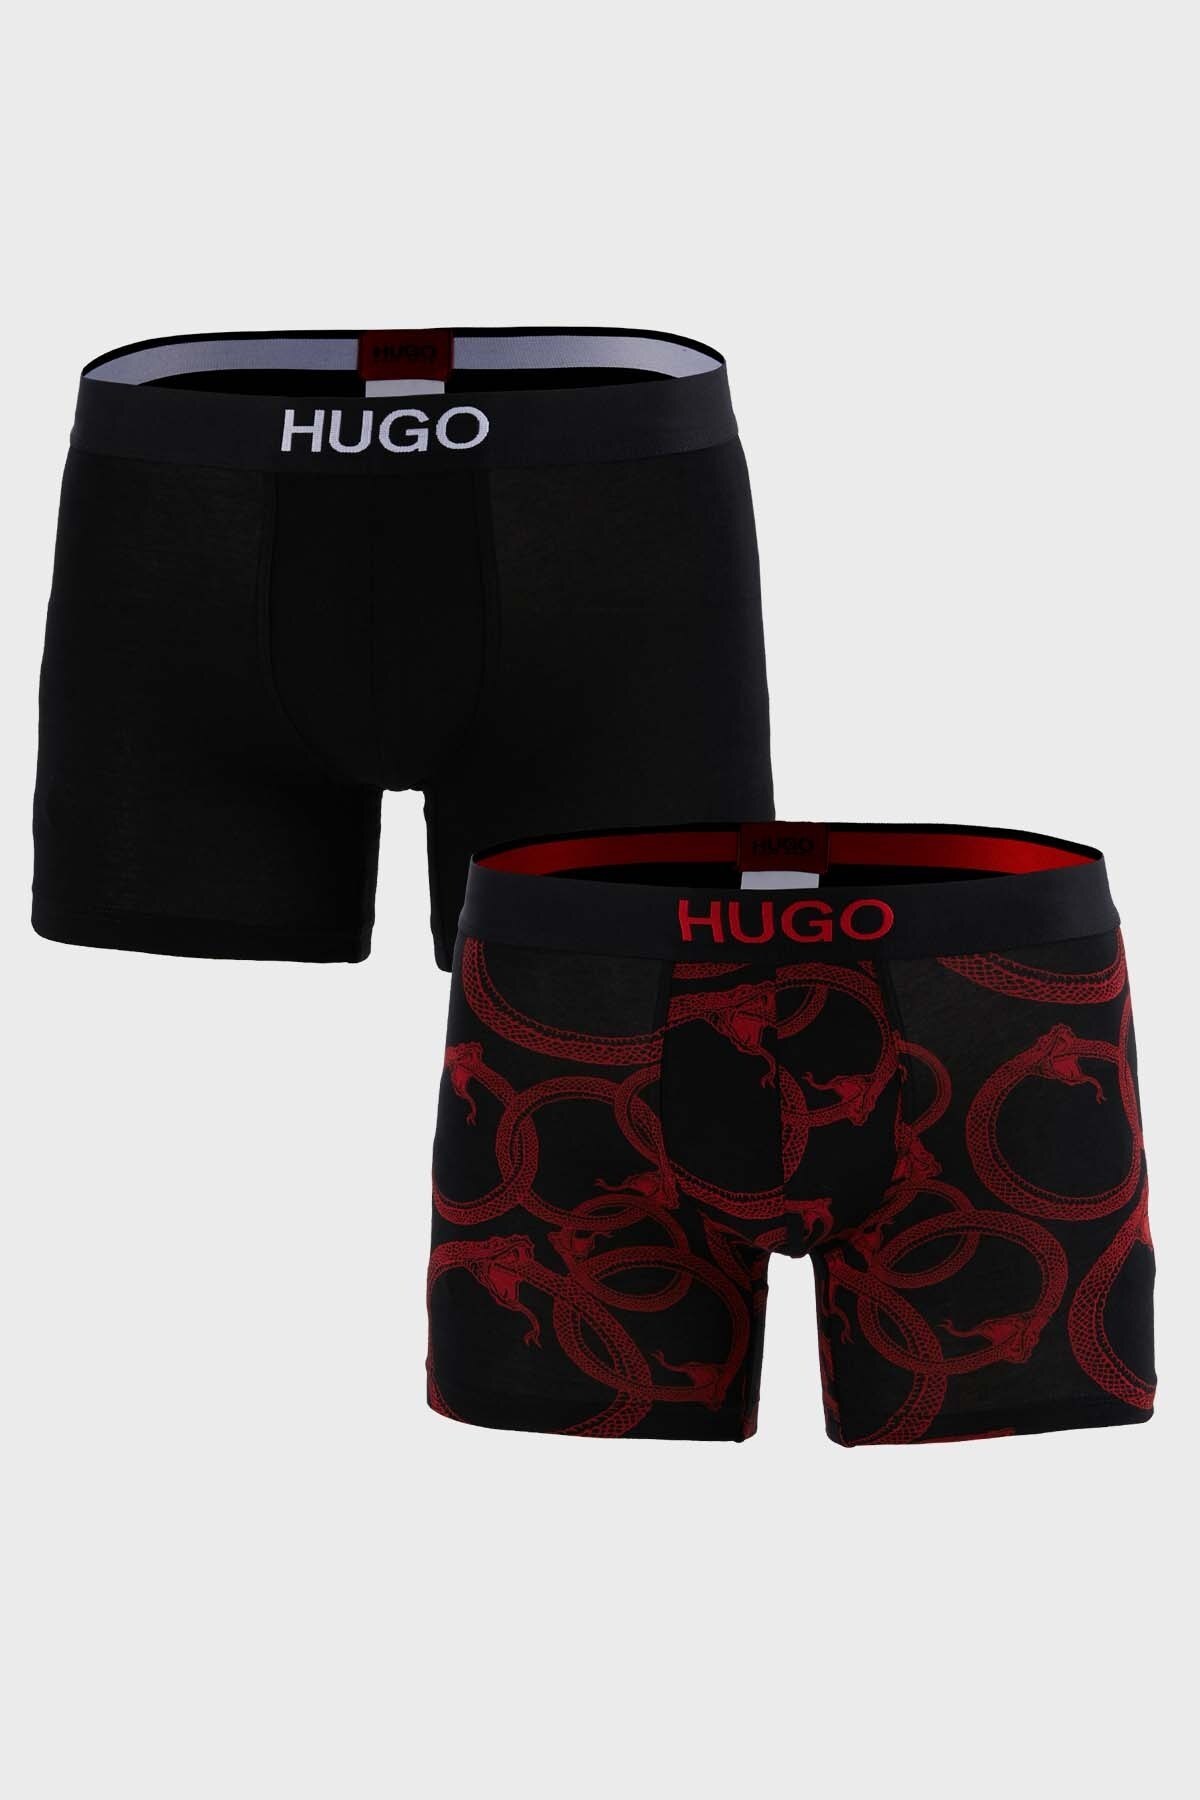 Hugo Boss 2 Pack Erkek Boxer 504585906 40A SİYAH